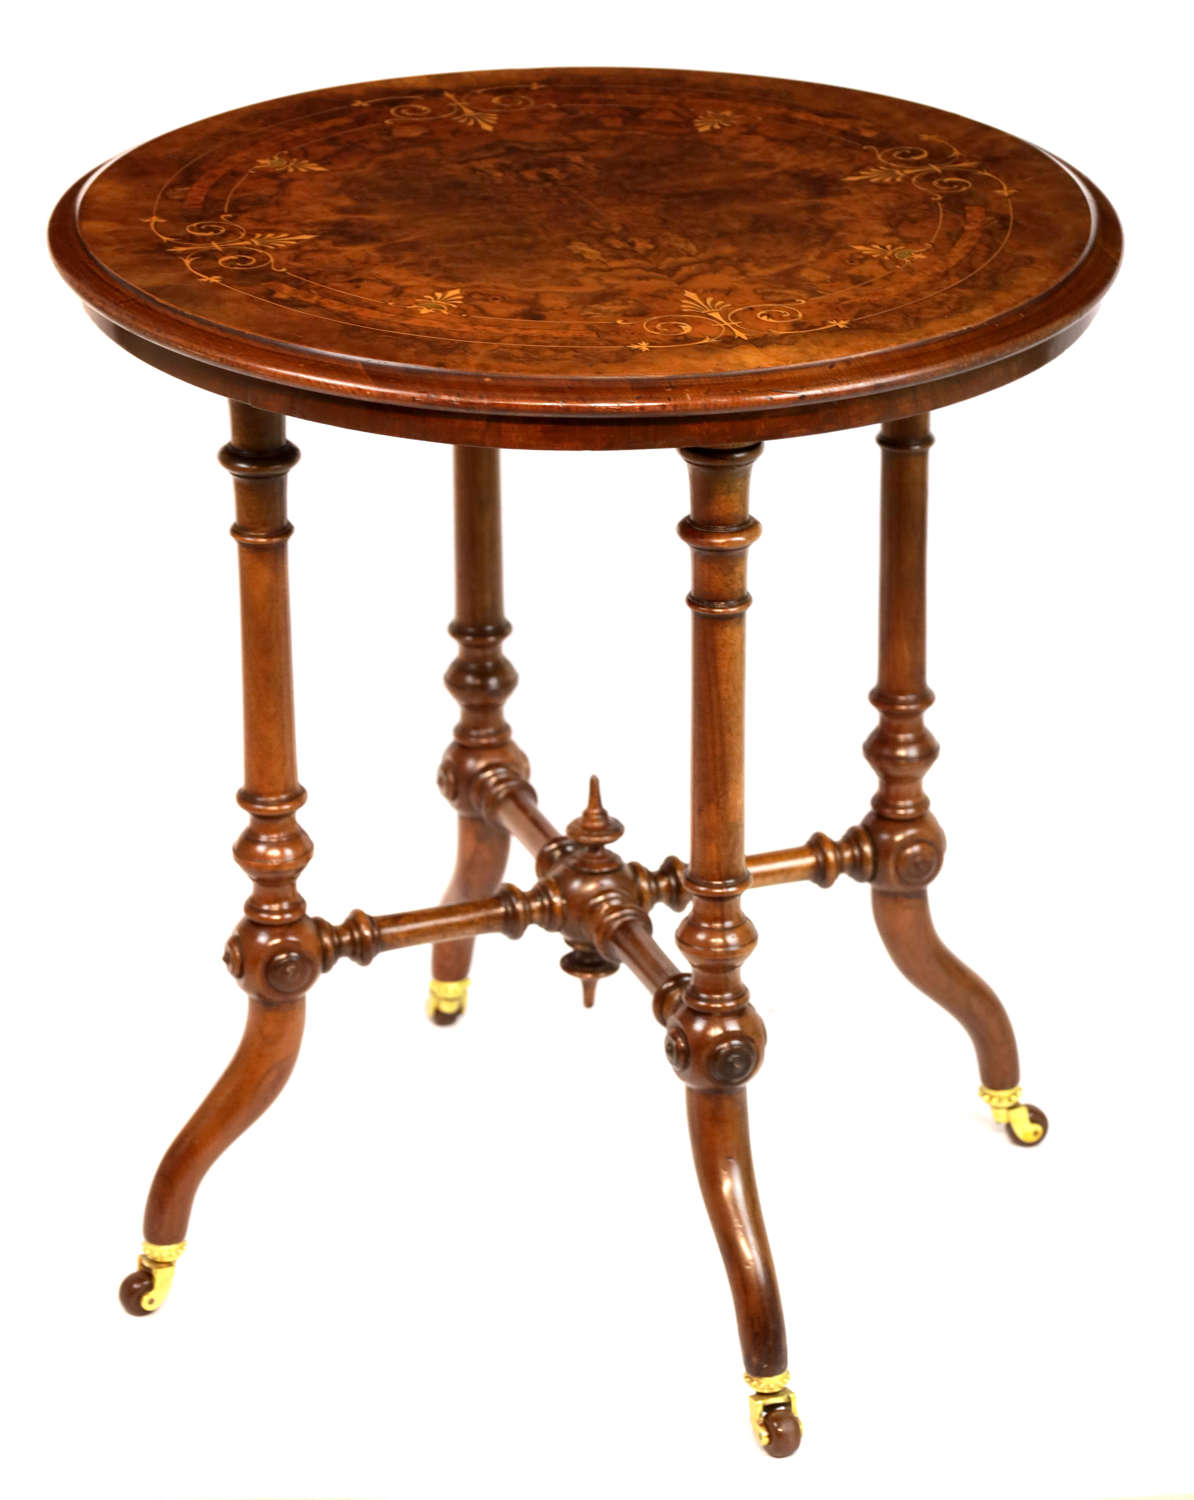 A Fine Quality Victorian Burr-Walnut Inlaid Round Table